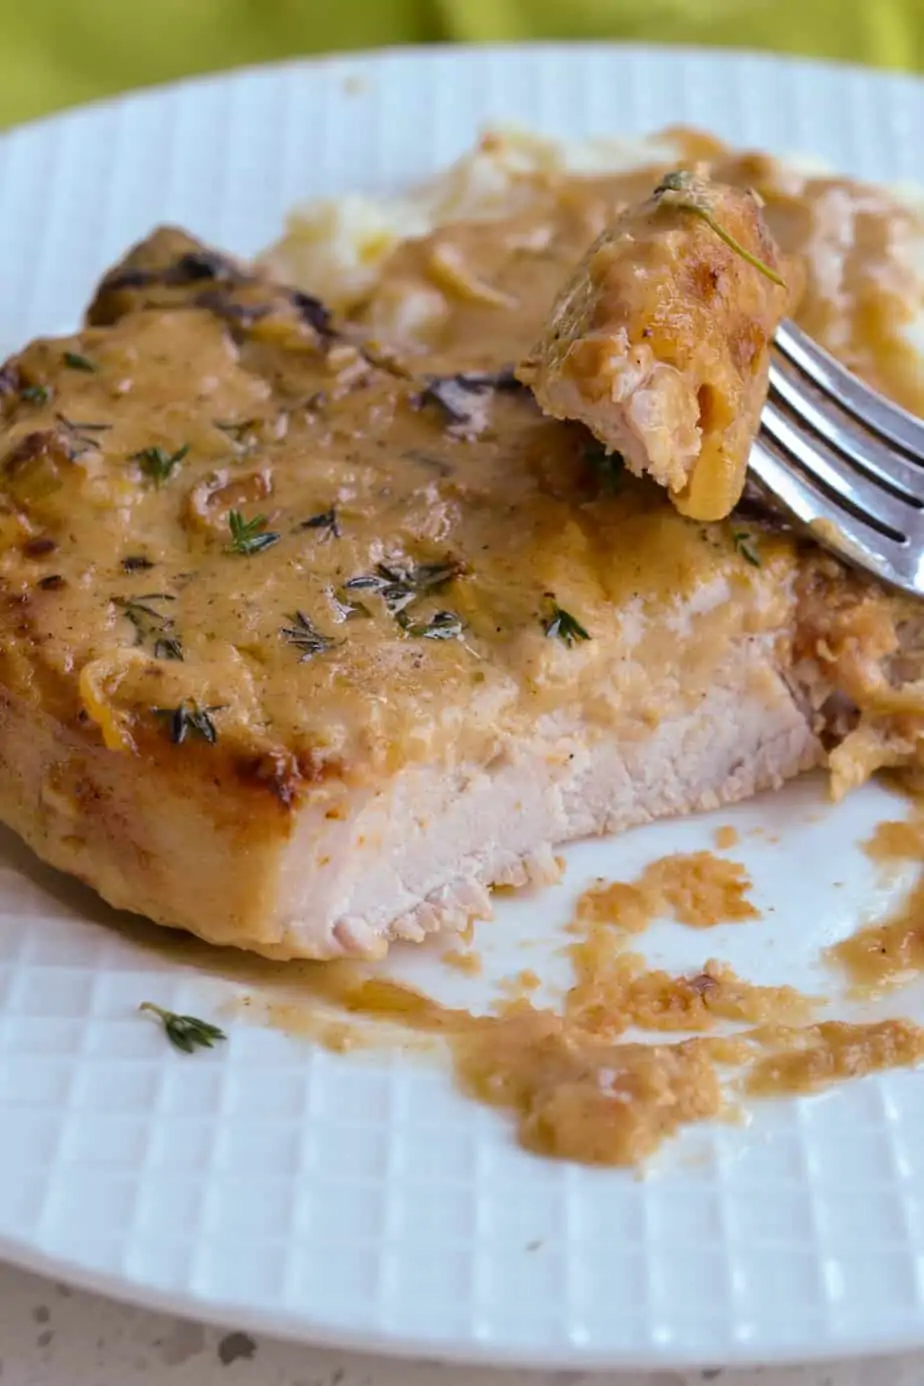 Pork Chop Seasoning (2 Minutes!) - Wholesome Yum